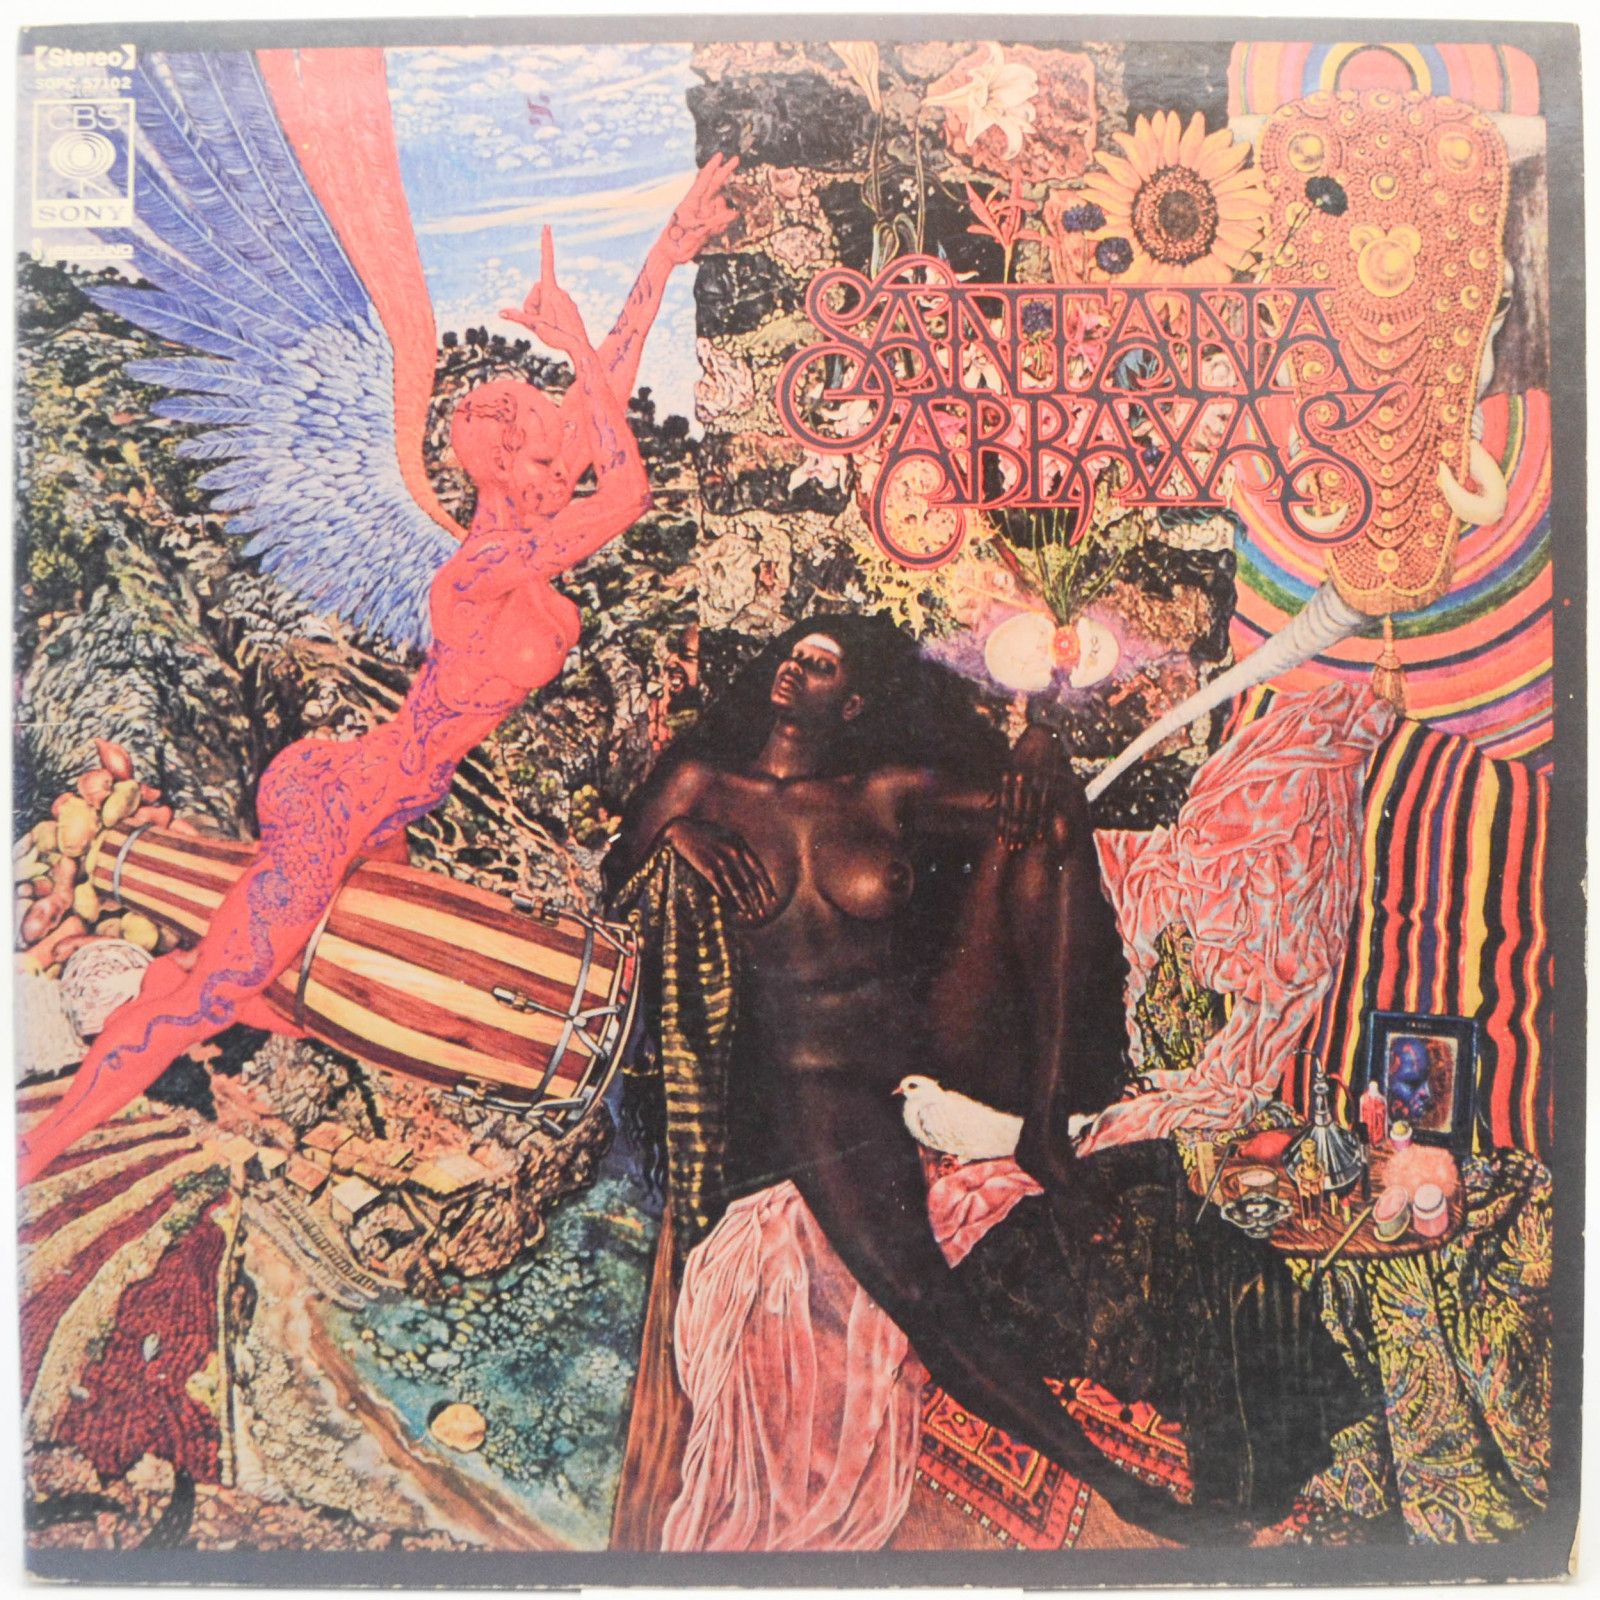 Santana — Abraxas (poster), 1970